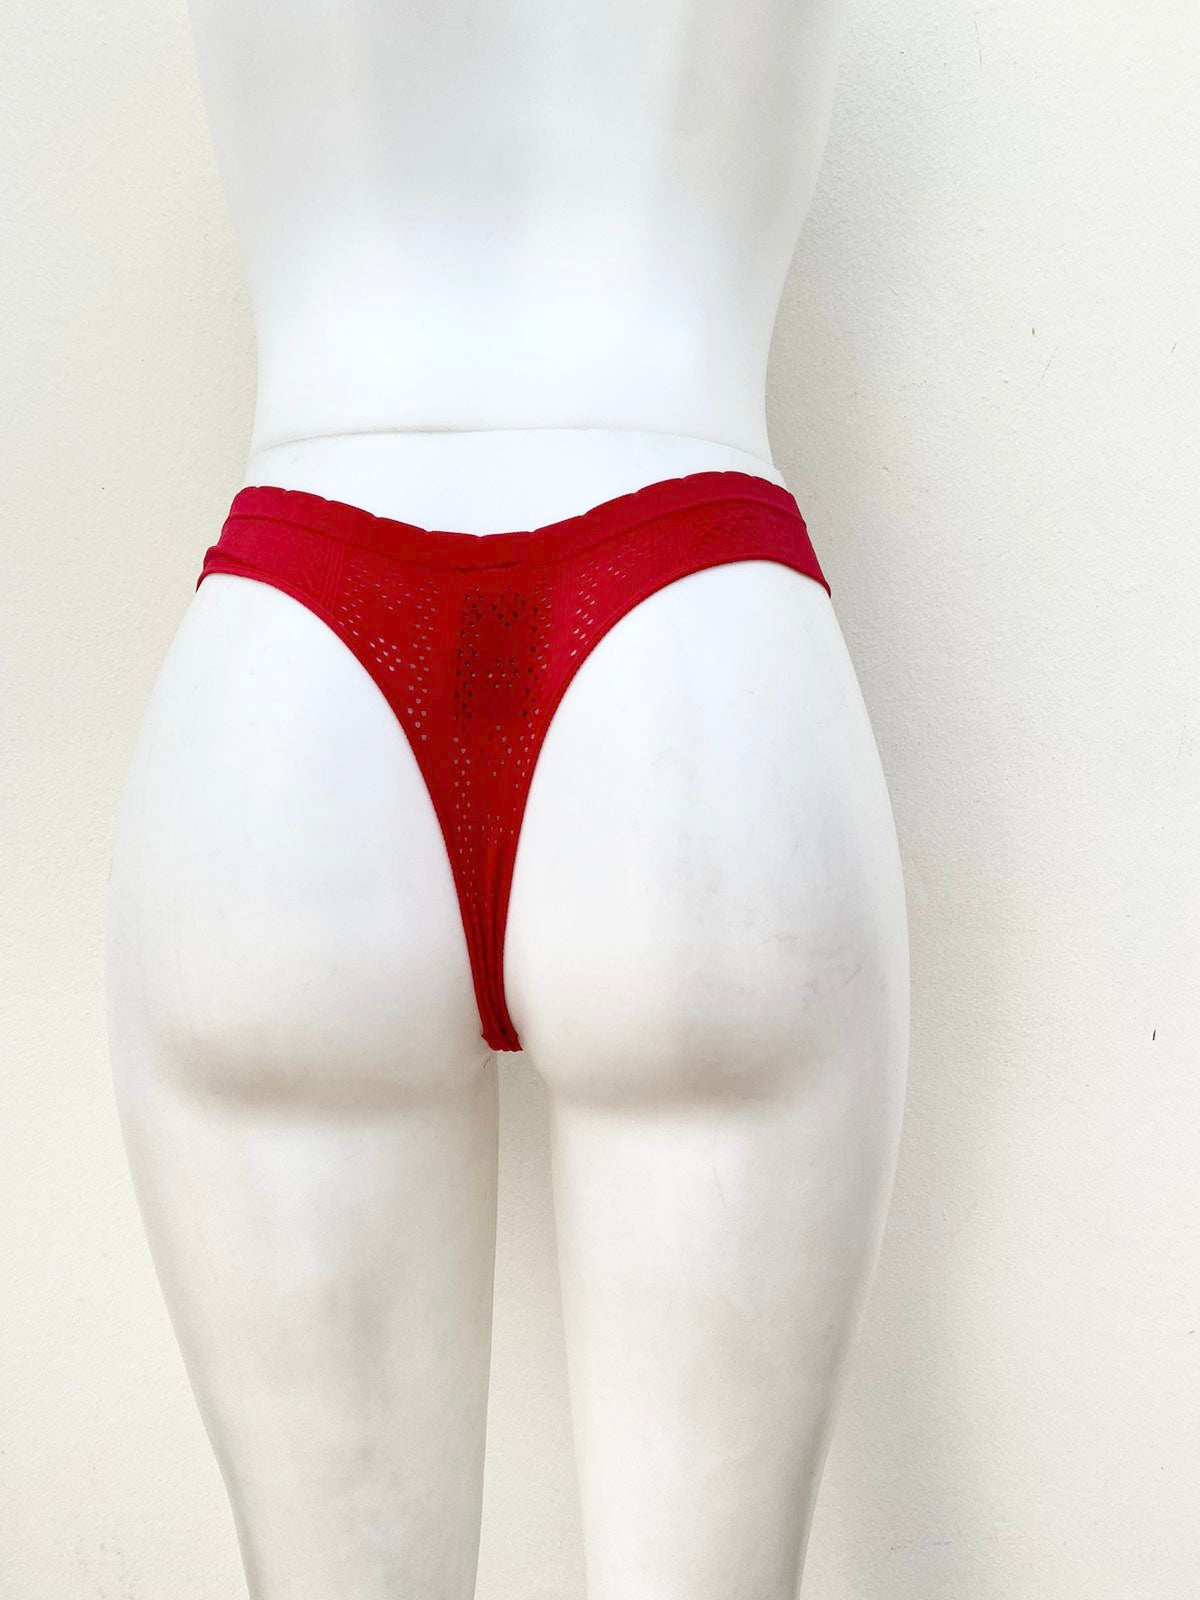 Panti VICTORIA'S Secret Original, color rojo, con hoyos. – Qlindo Store